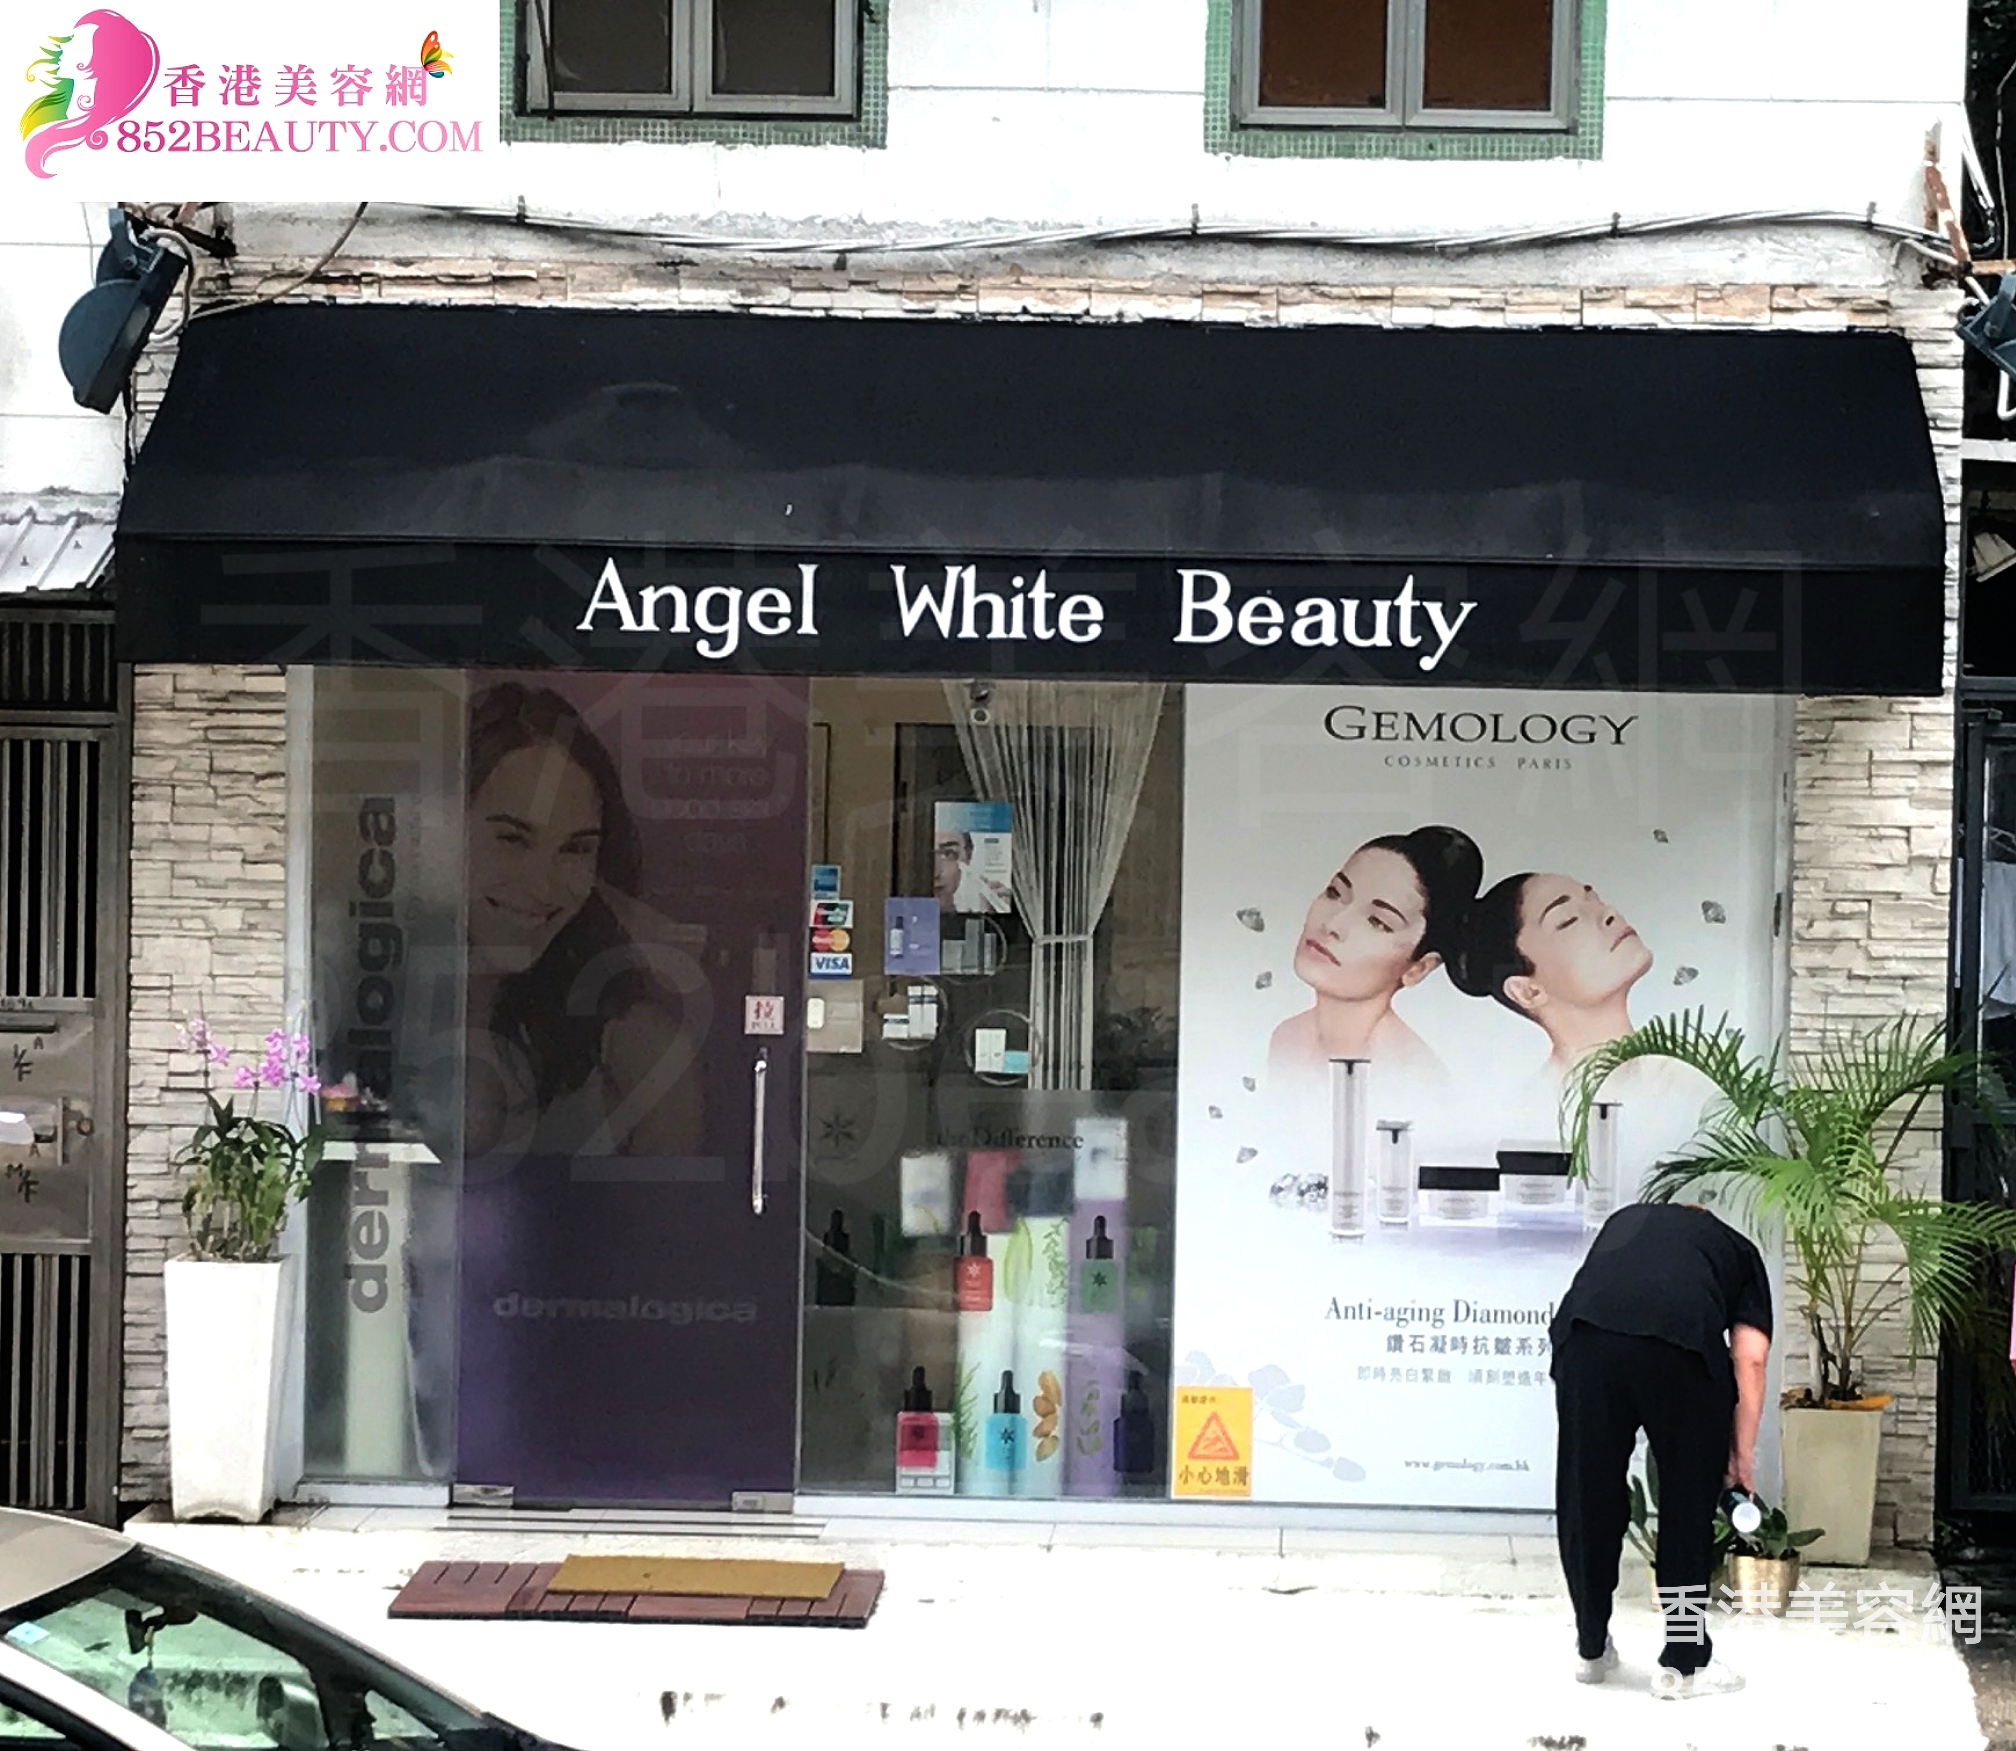 Facial Care: Angel White Beauty